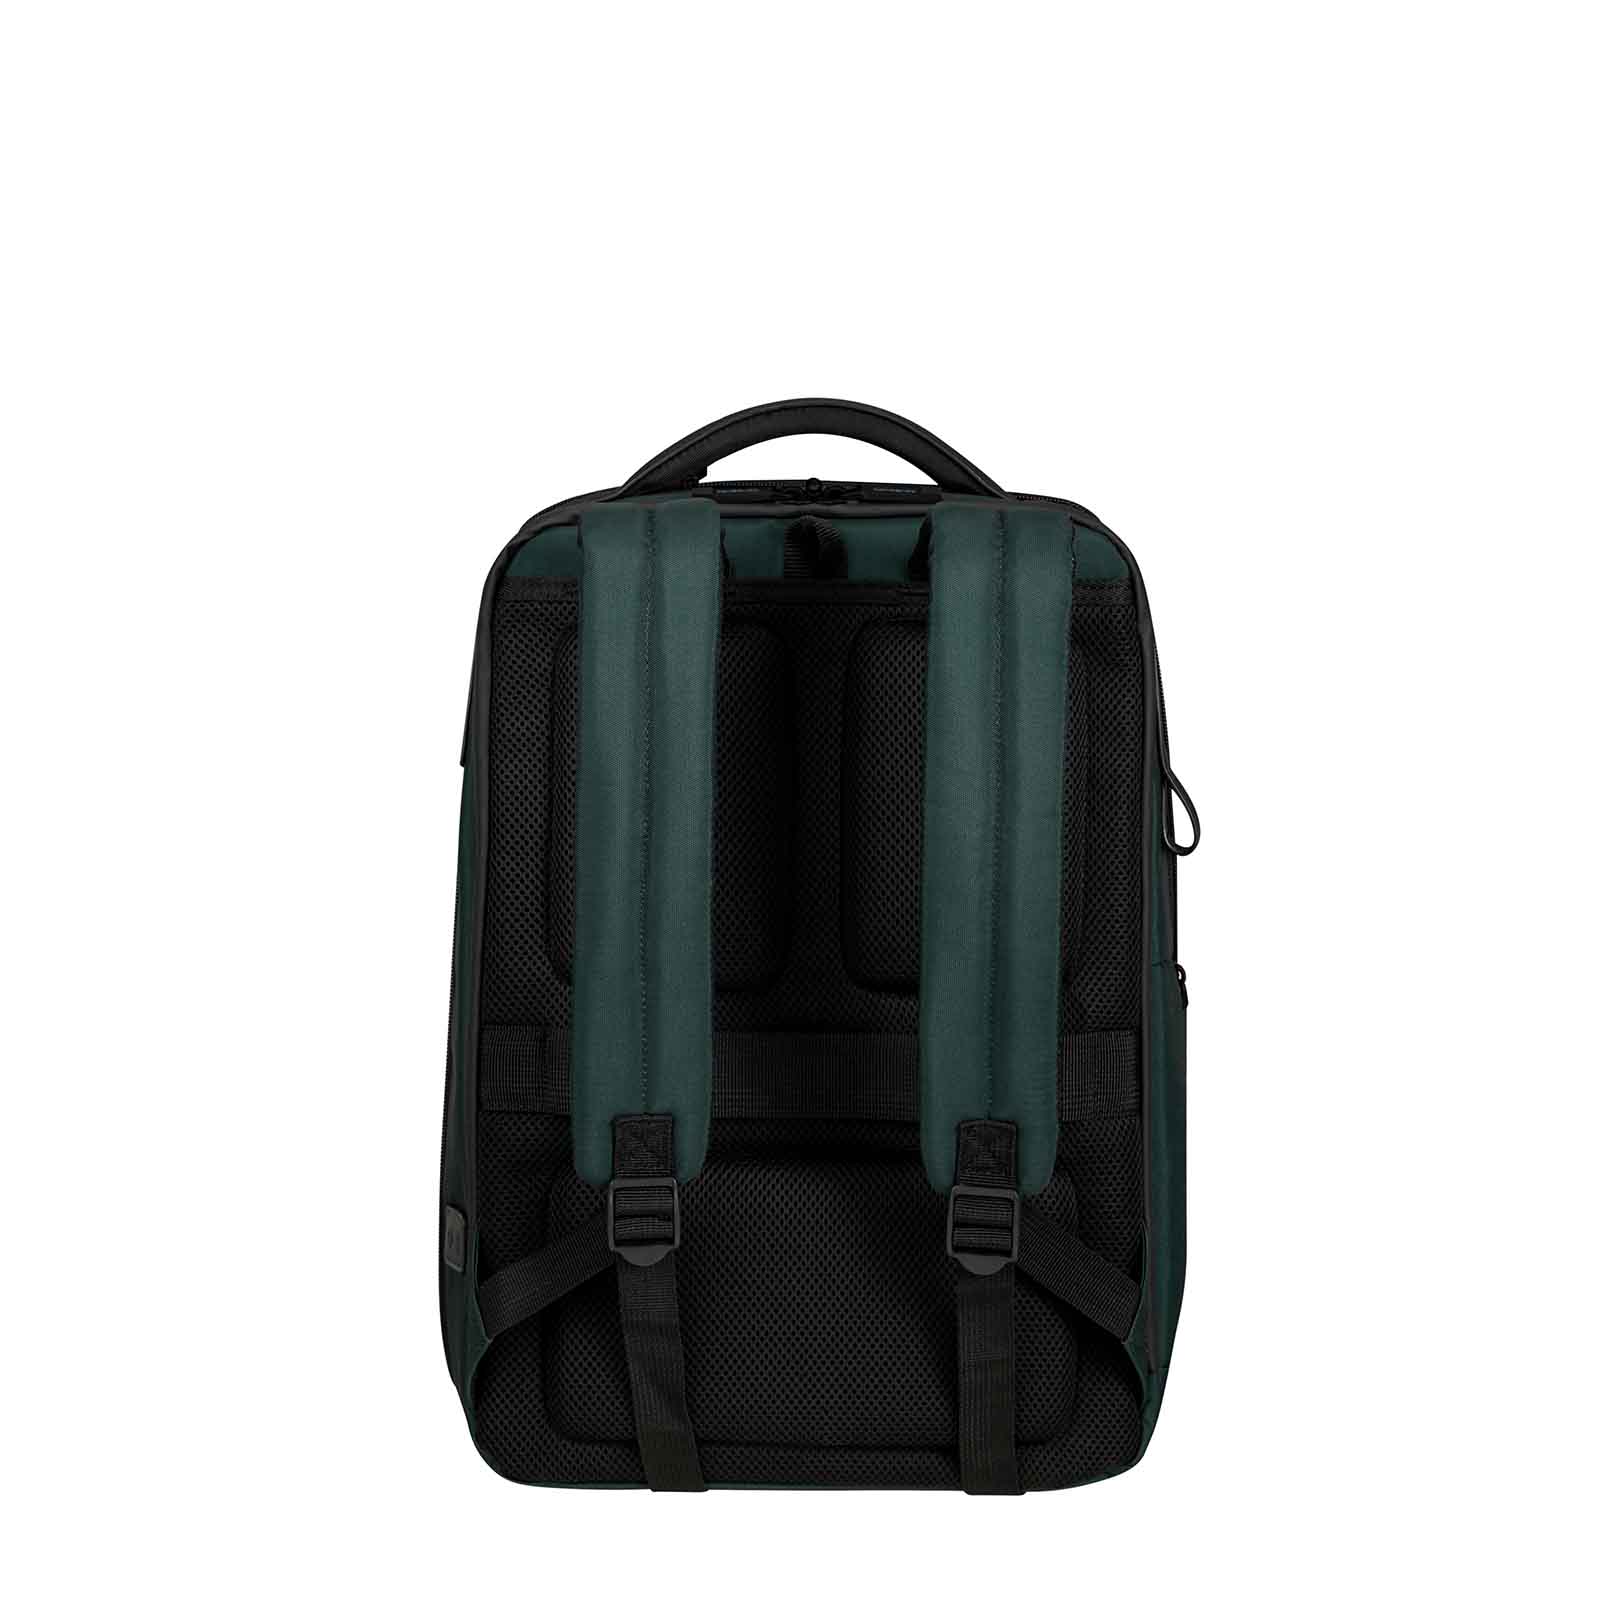 Samsonite-Litepoint-15-Inch-Laptop-Backpack-Urban-Green-Back